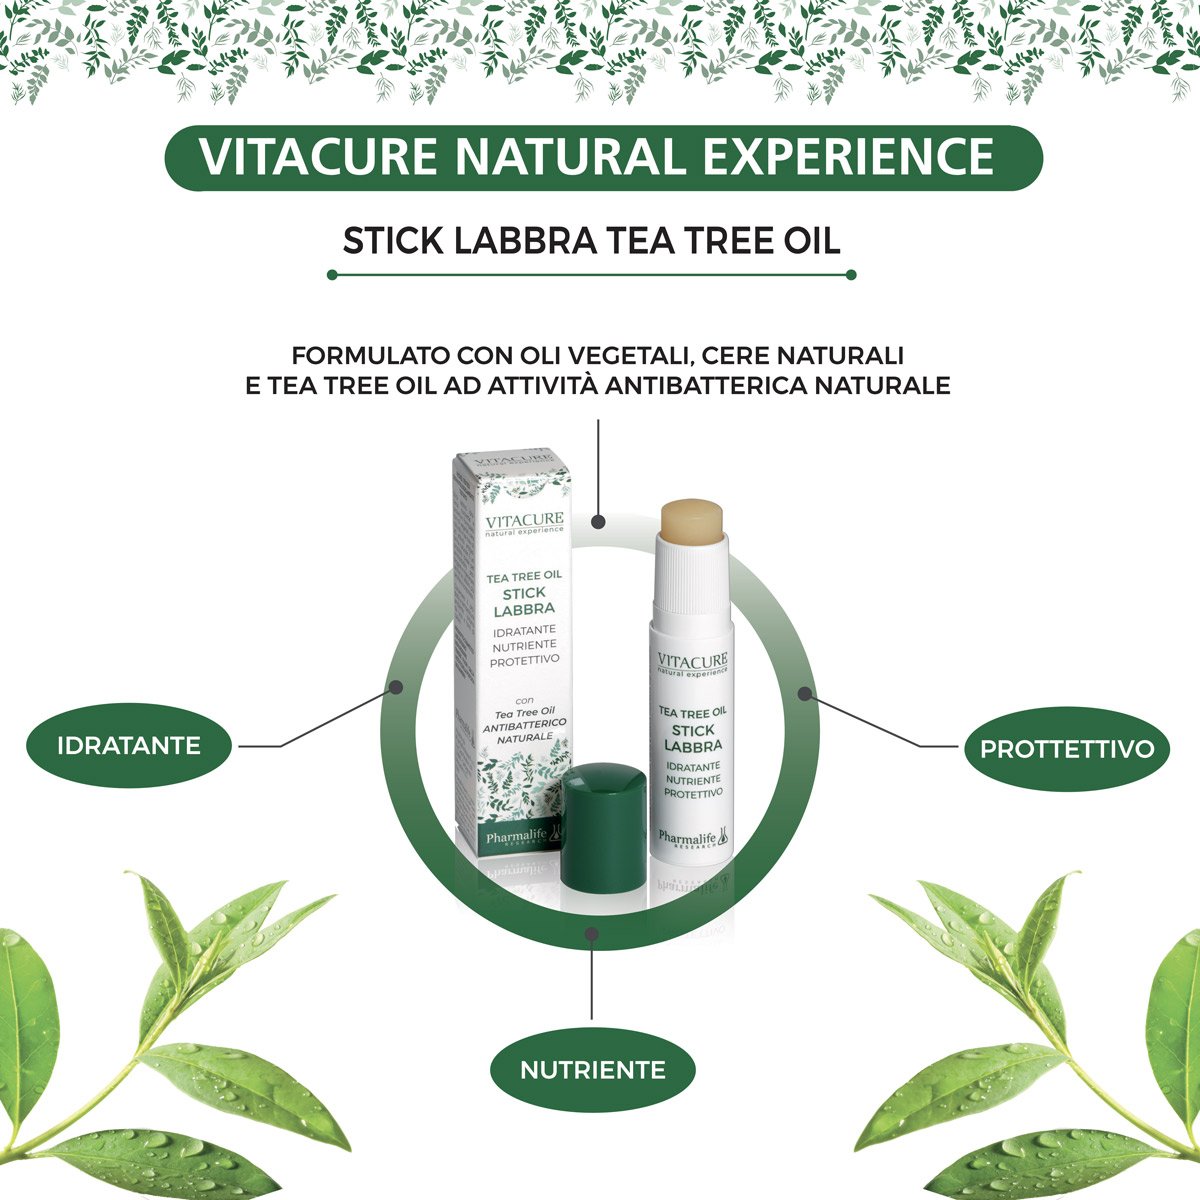 Doctor of Philosophy Effectively register Tea Tree Oil Stick Labbra Idratante - Pharmalife Research